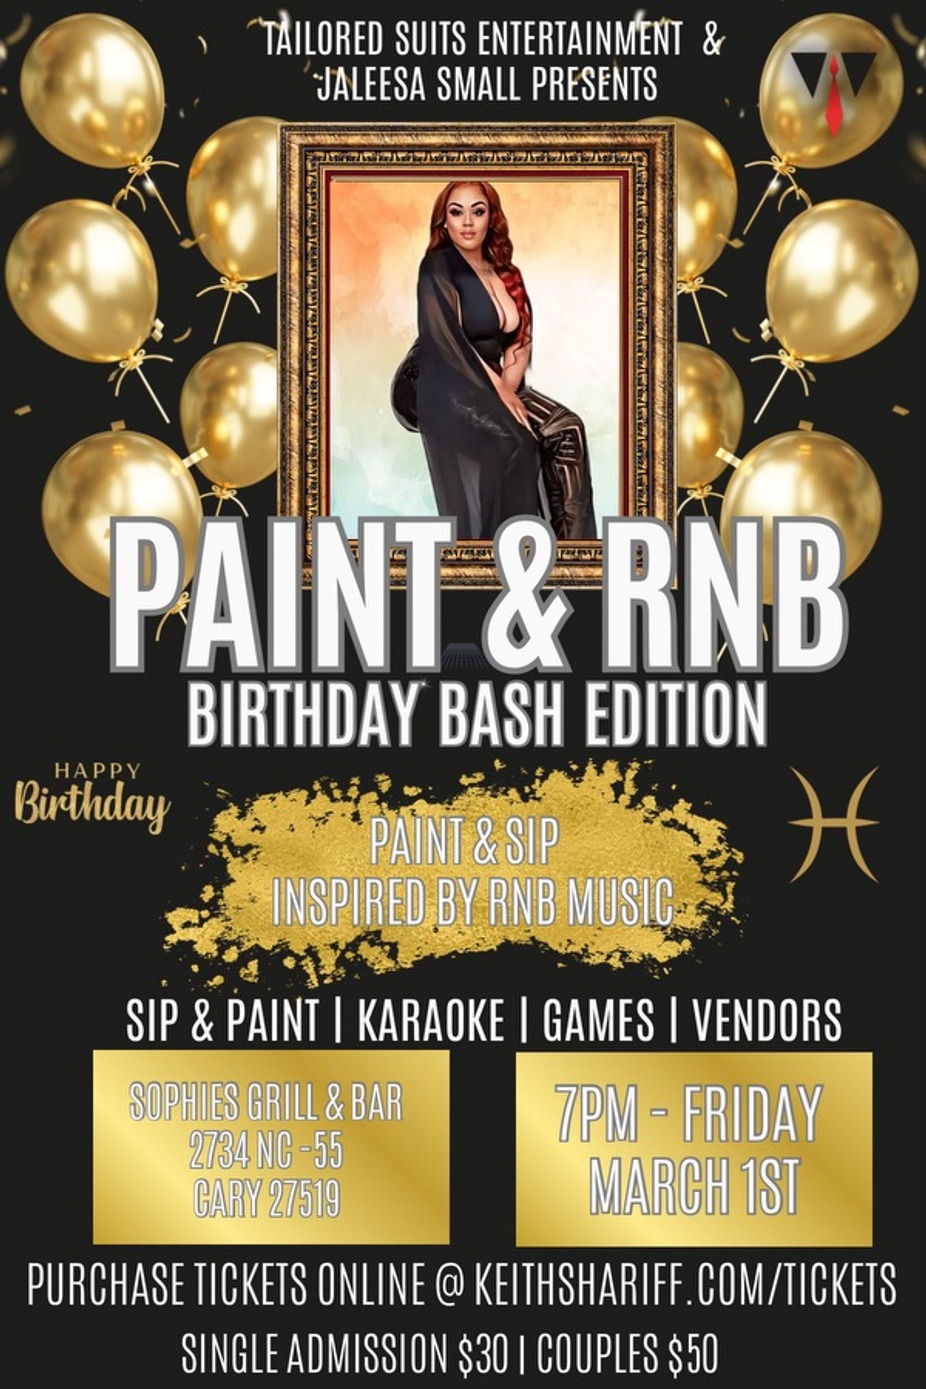 Paint & RnB - Birthday Bash Edition event photo